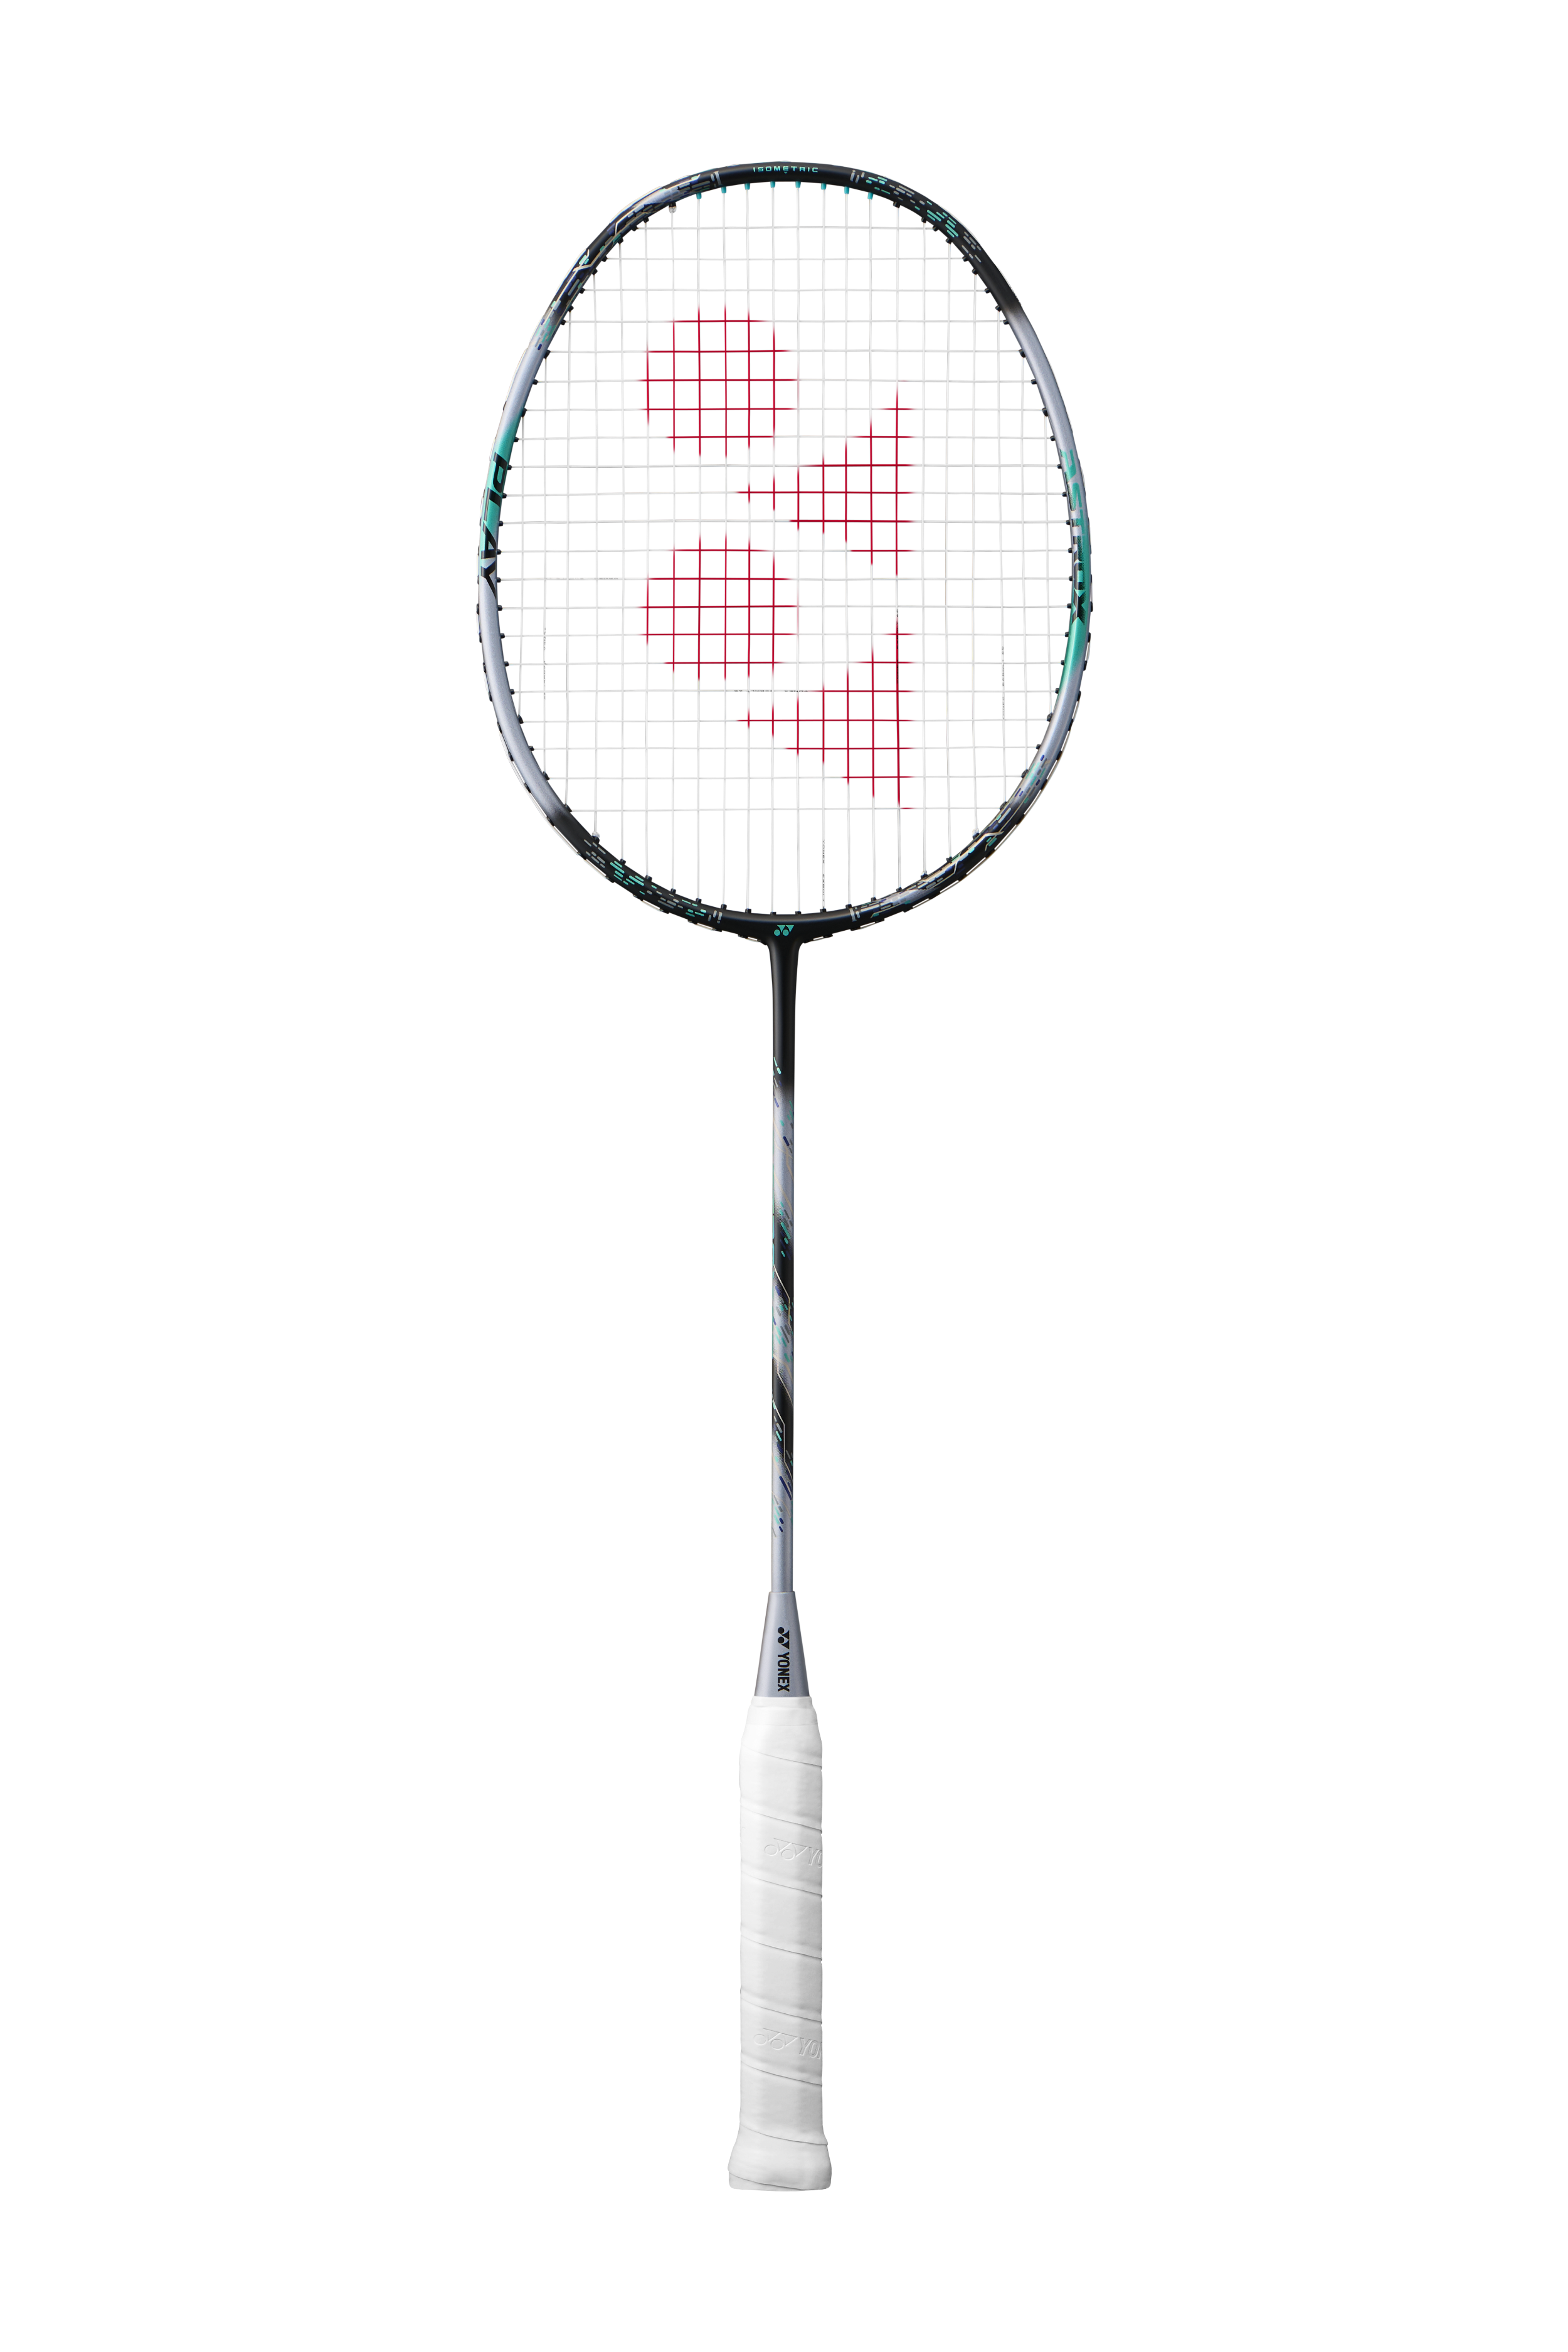 Yonex Badminton Racquet - ASTROX 88 PLAY - 3AX88-PL - 4U5 - Strung